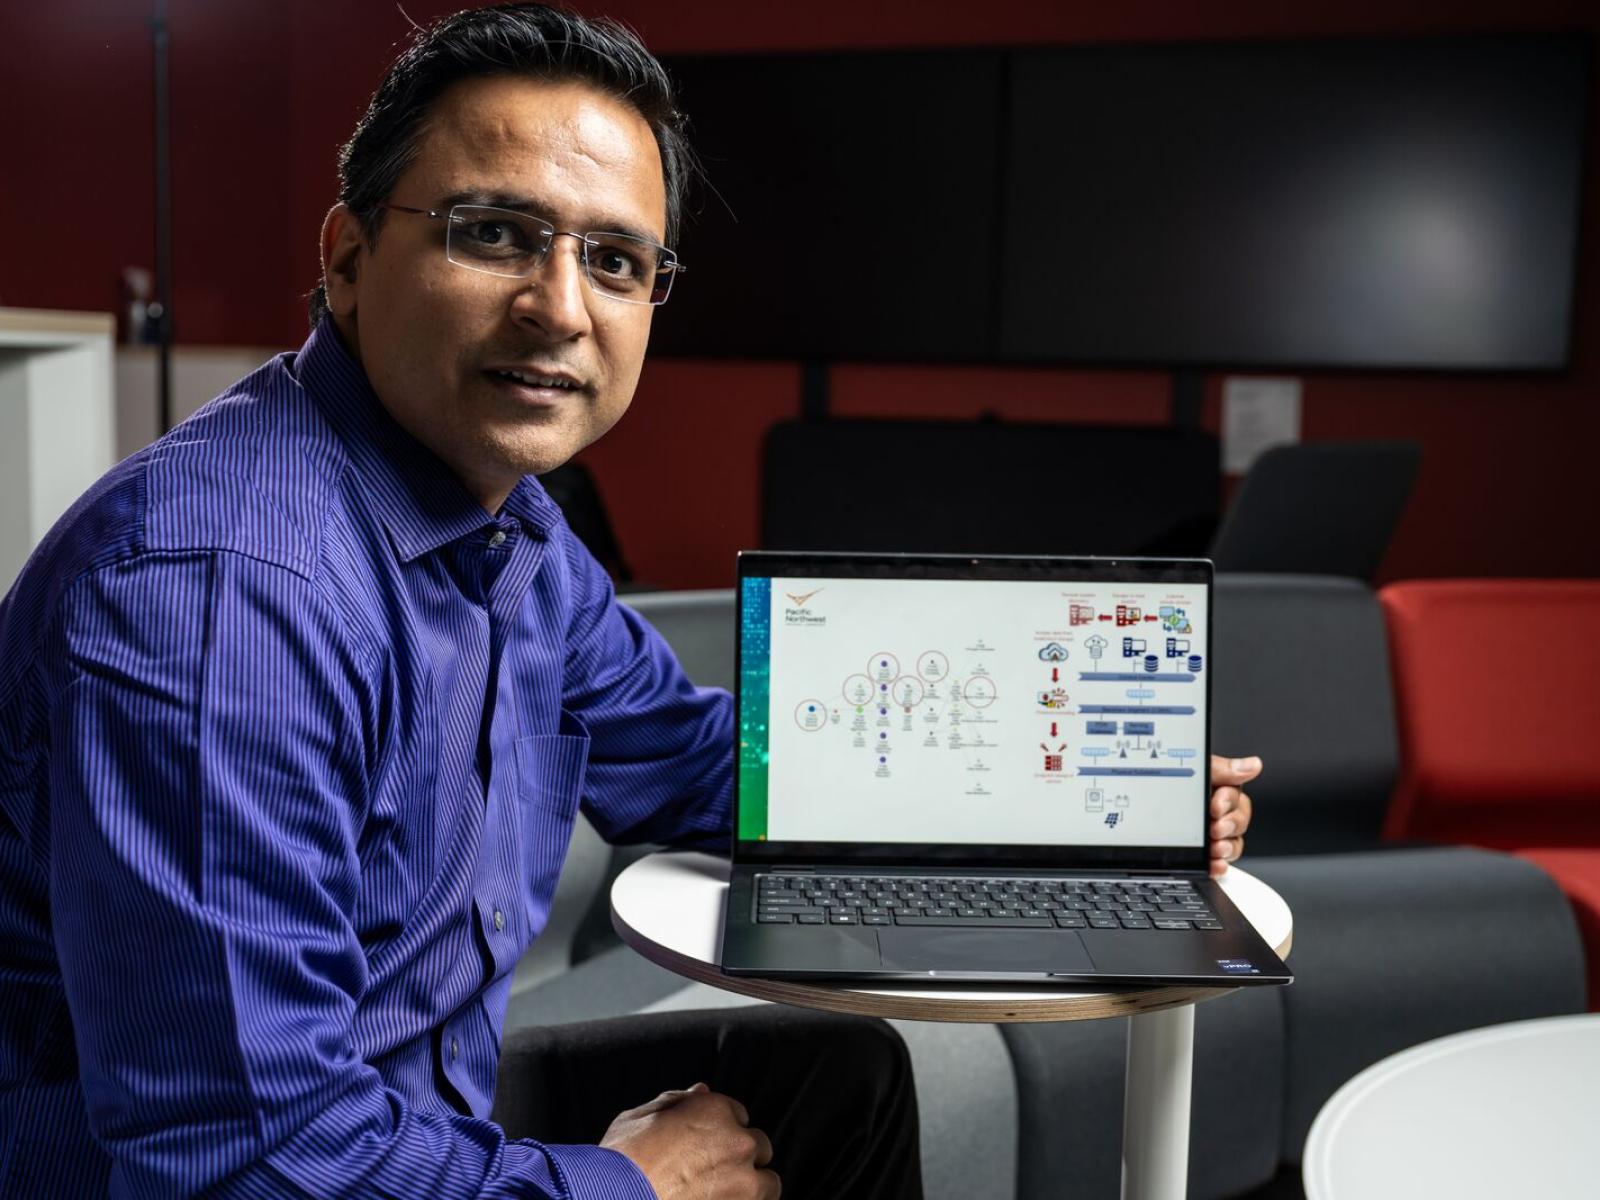 Photo of Sumit Purohit, sitting next to a laptop